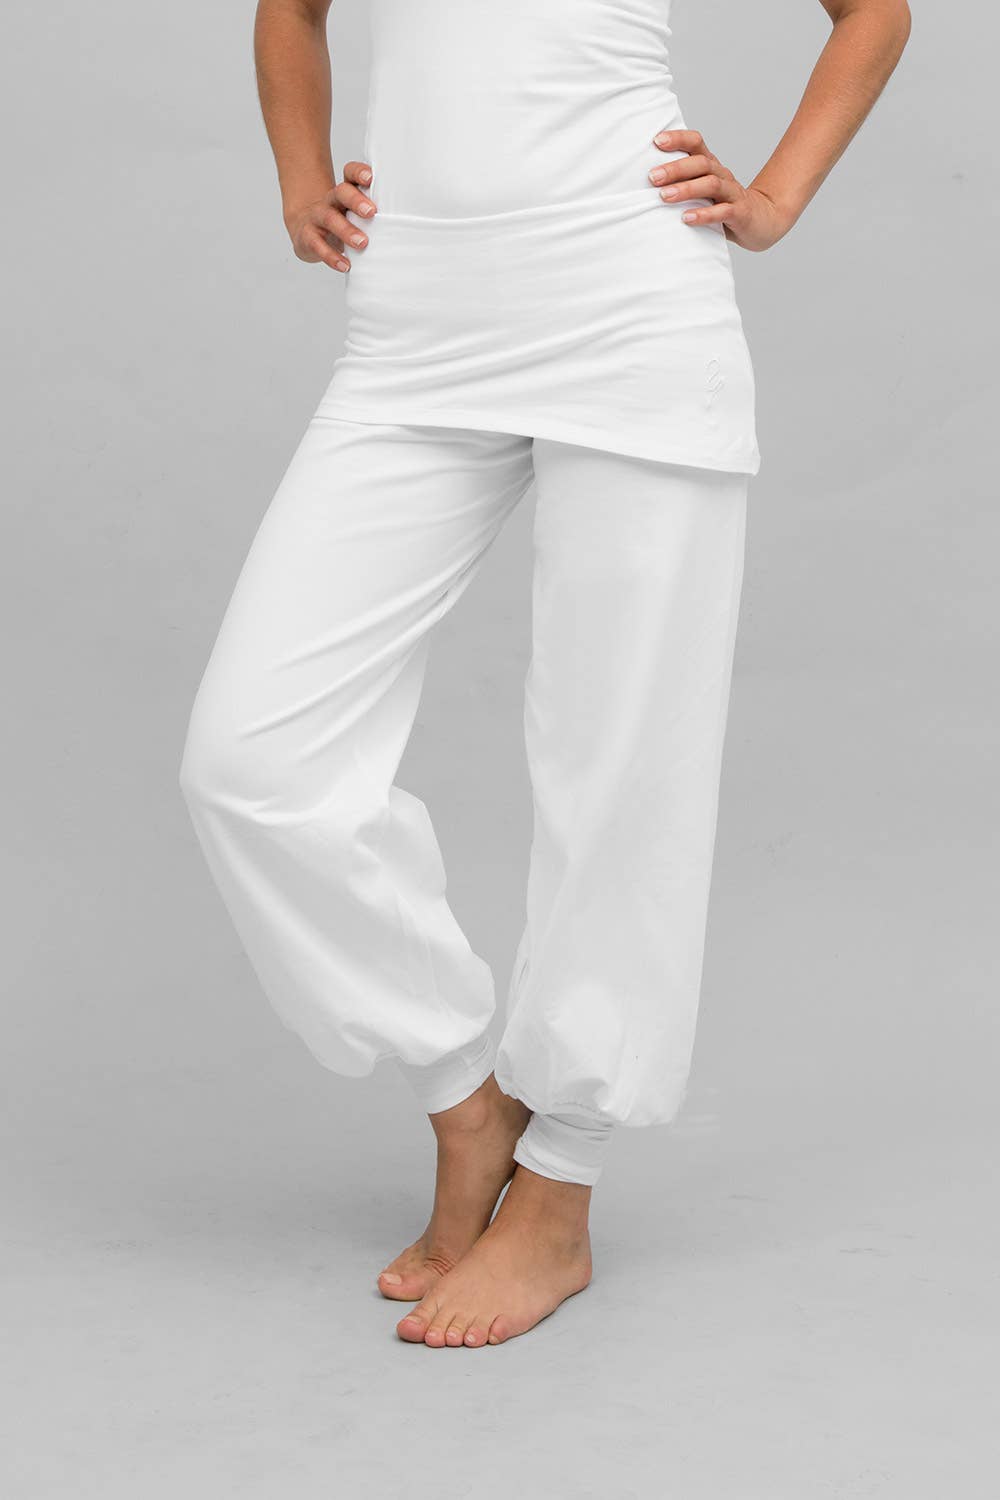 traditional yoga pants - Google Search  Pants for women, Yoga clothes,  Fashion